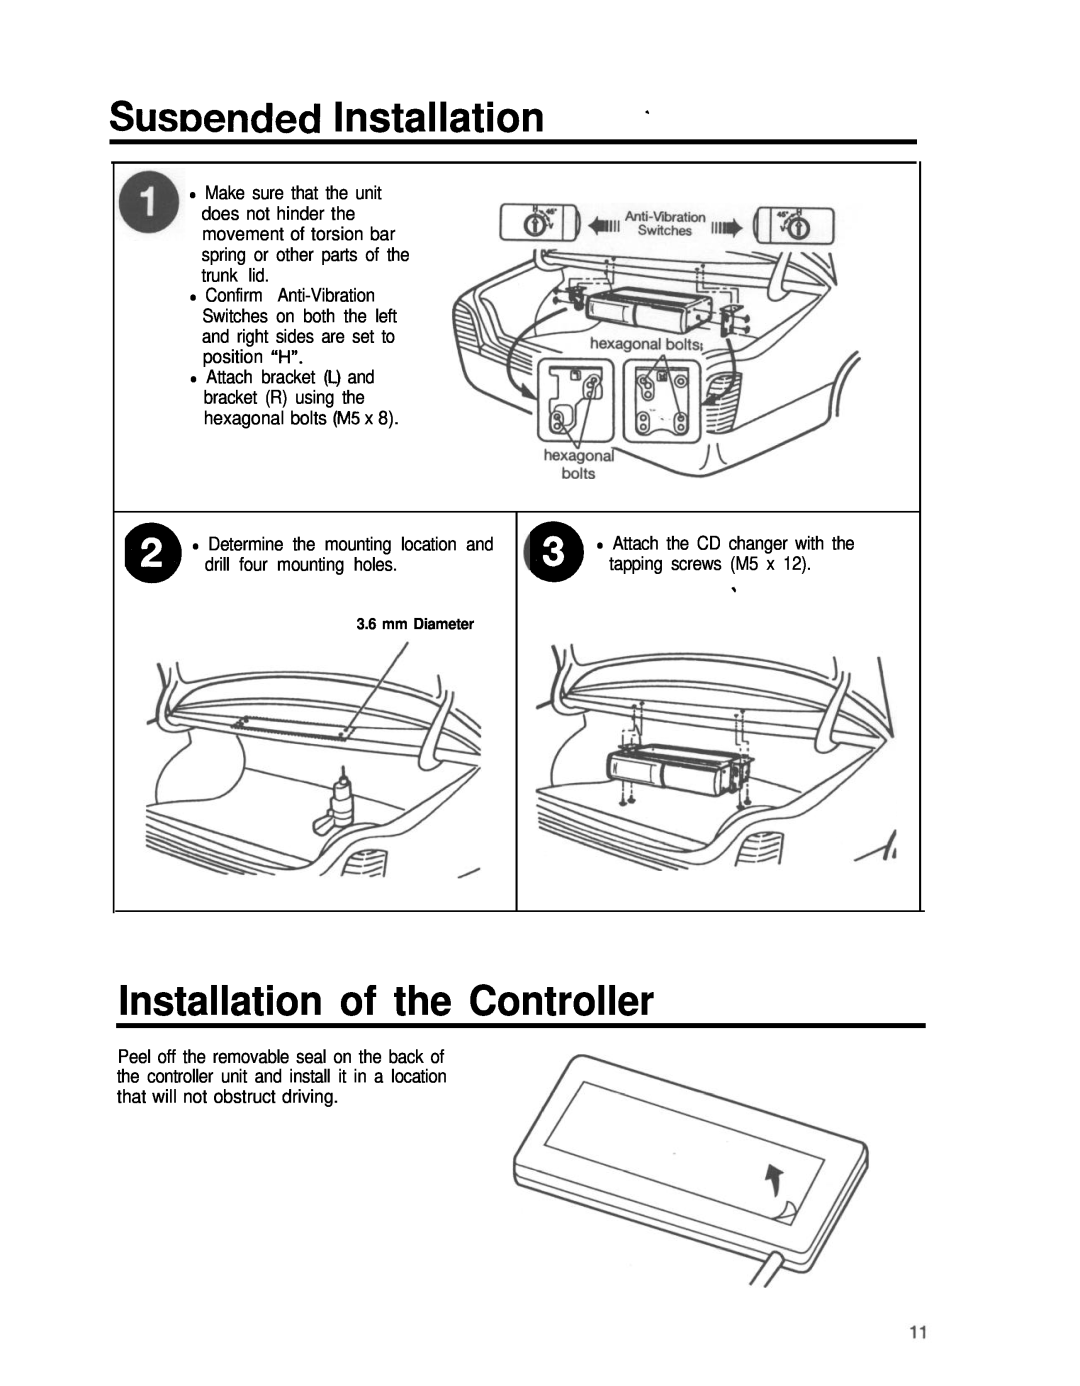 Blaupunkt CDC-RF6IR manual Sumended Installation, Installation of the Controller, mm Diameter 